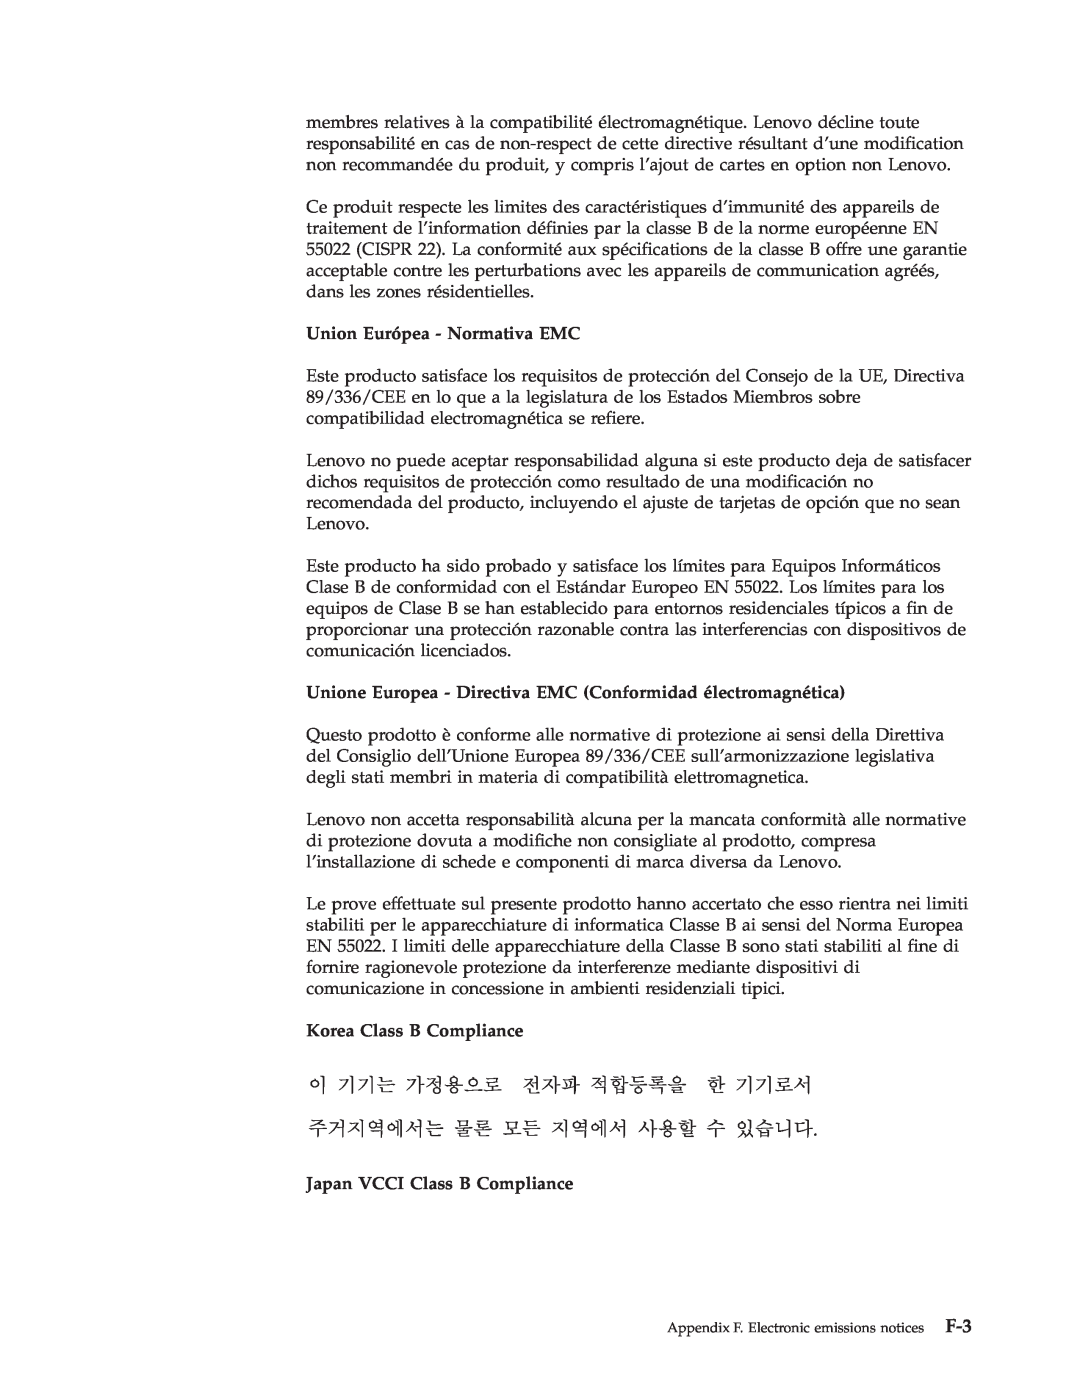 Lenovo 40Y8710 manual Union Európea - Normativa EMC, Korea Class B Compliance, Japan VCCI Class B Compliance 